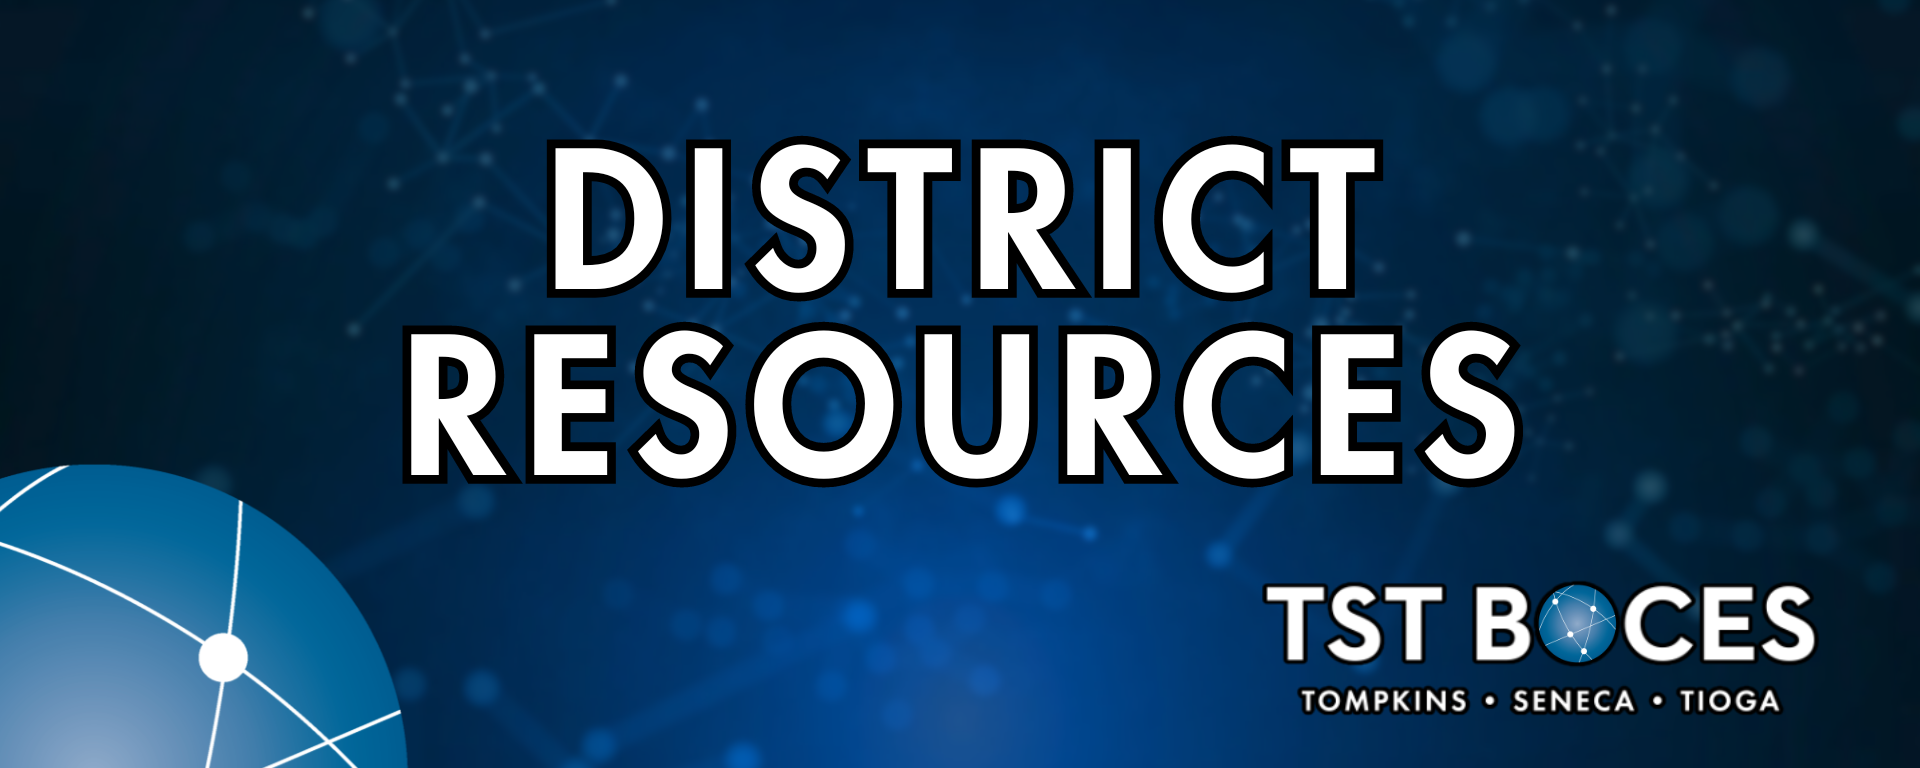 district resources banner